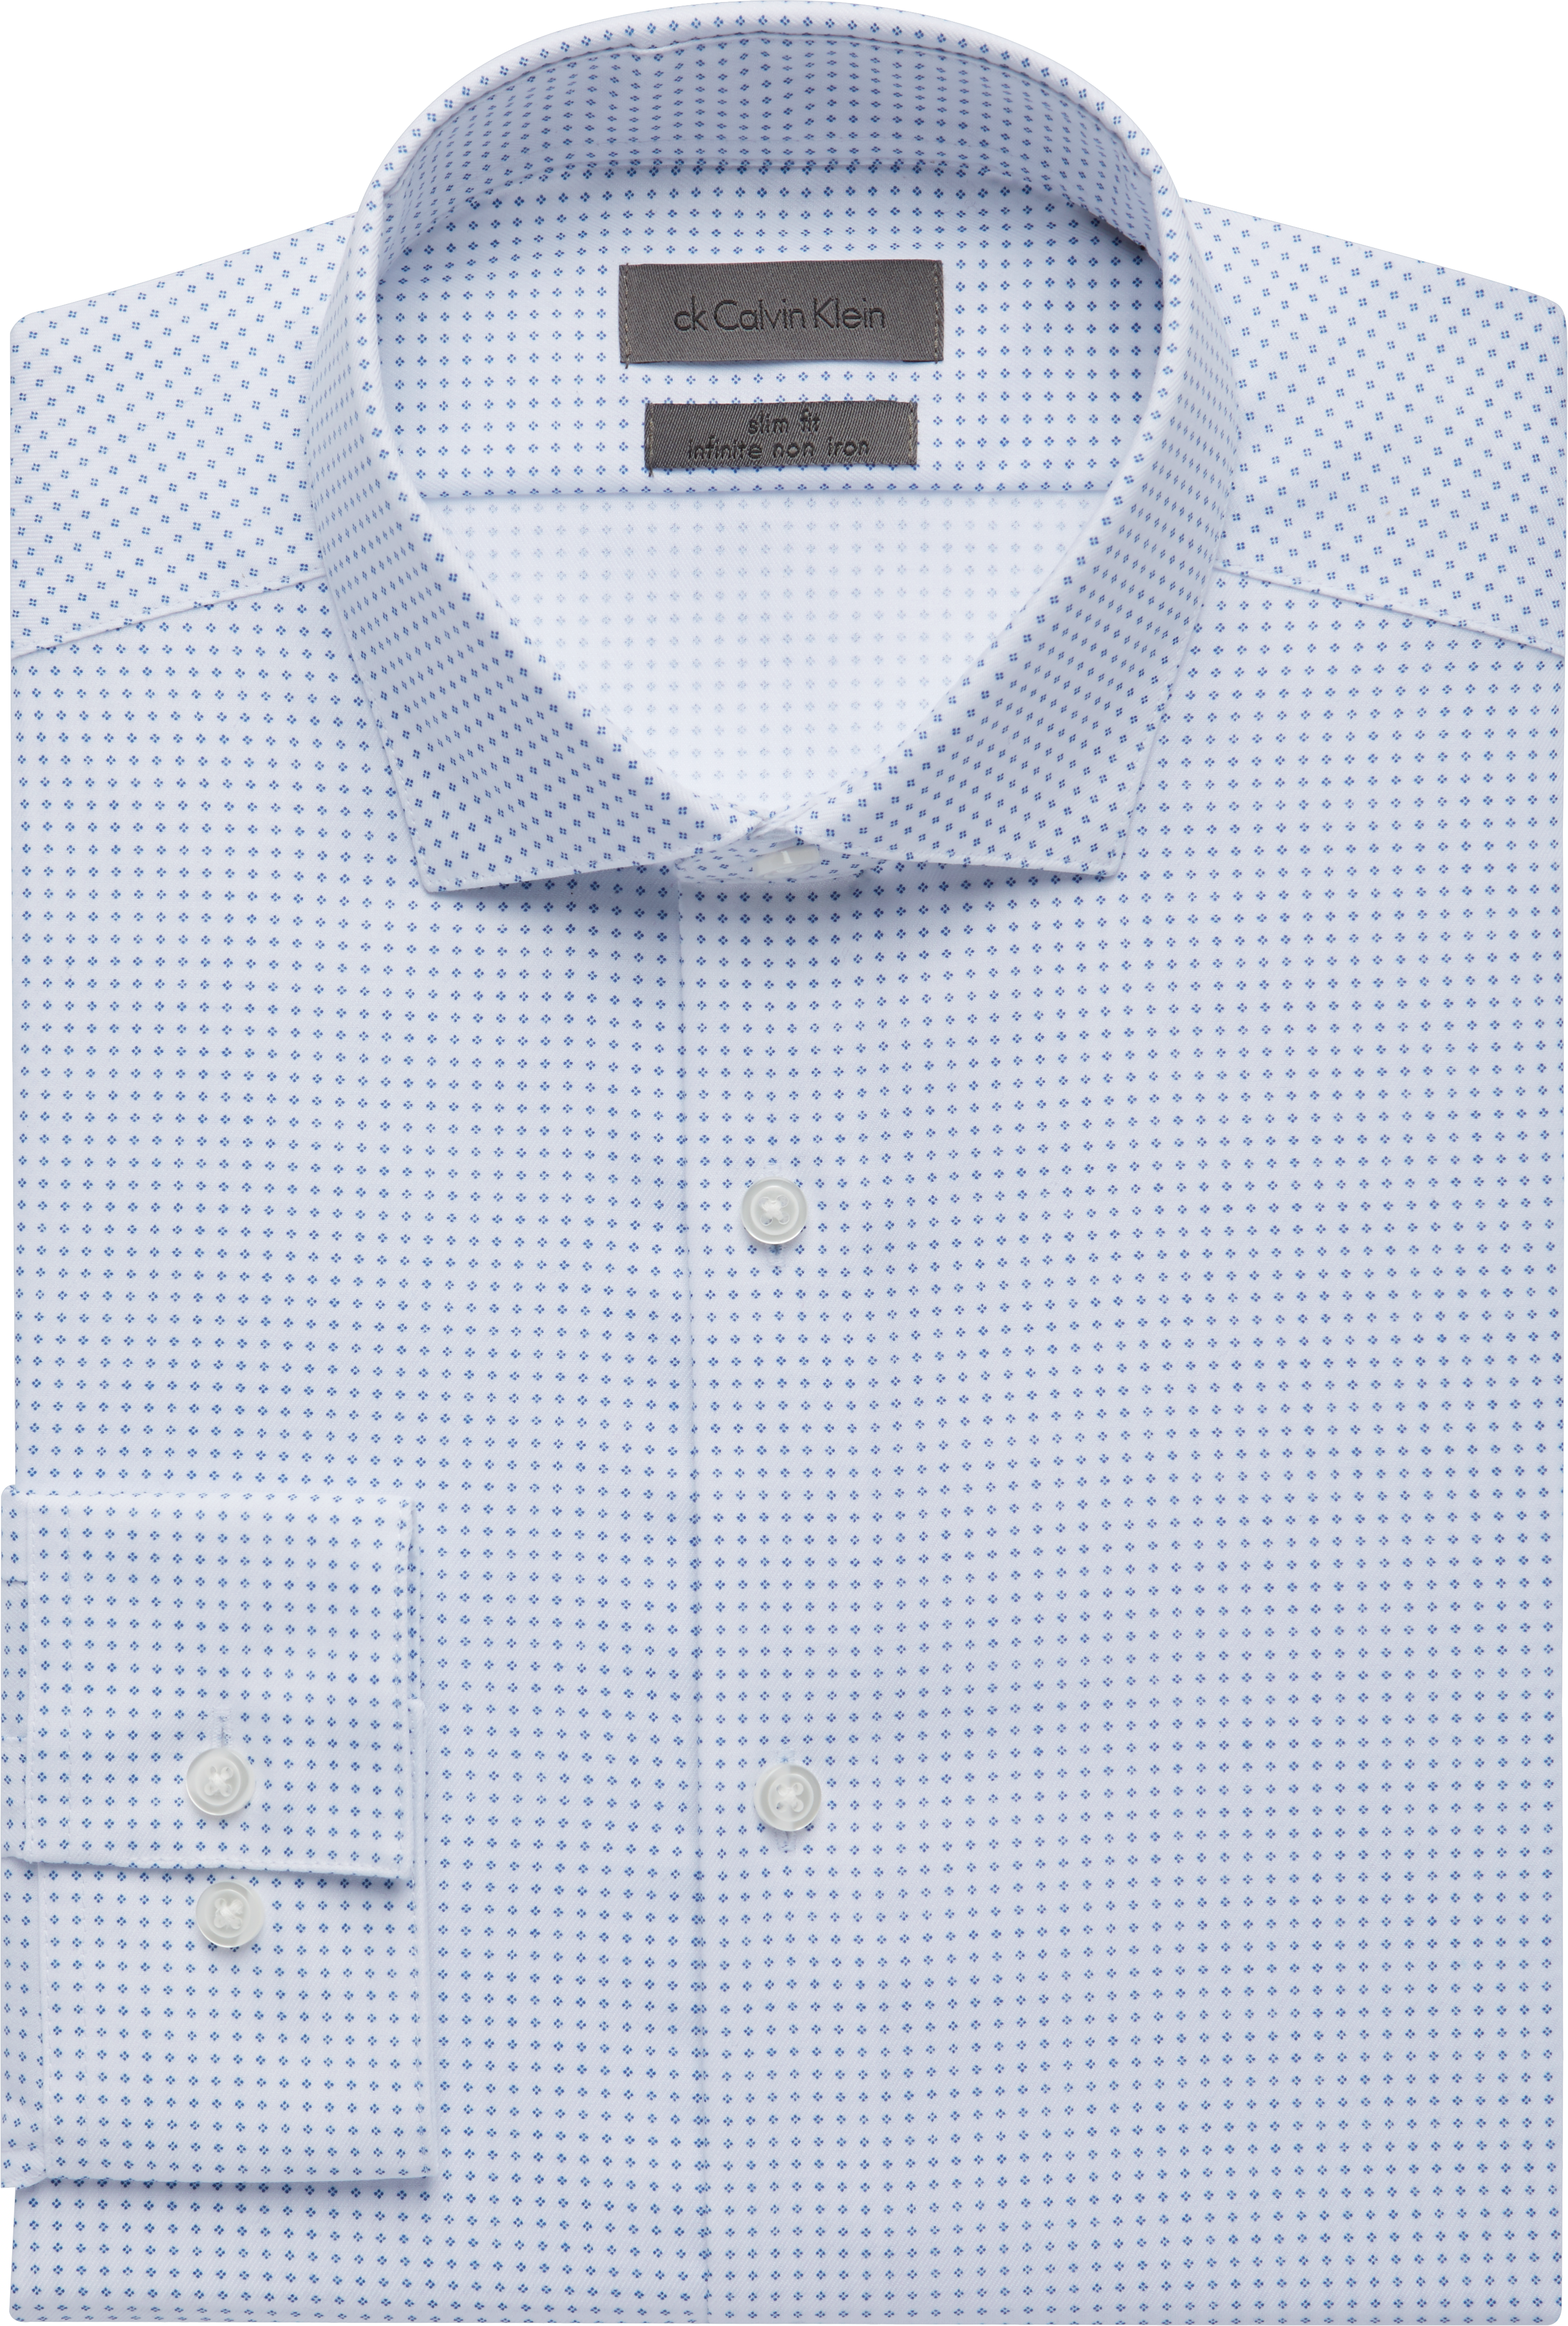 Calvin Klein Infinite Non-Iron Slim Fit Stretch Collar Dress Shirt, Blue  Dot - Men's Featured |